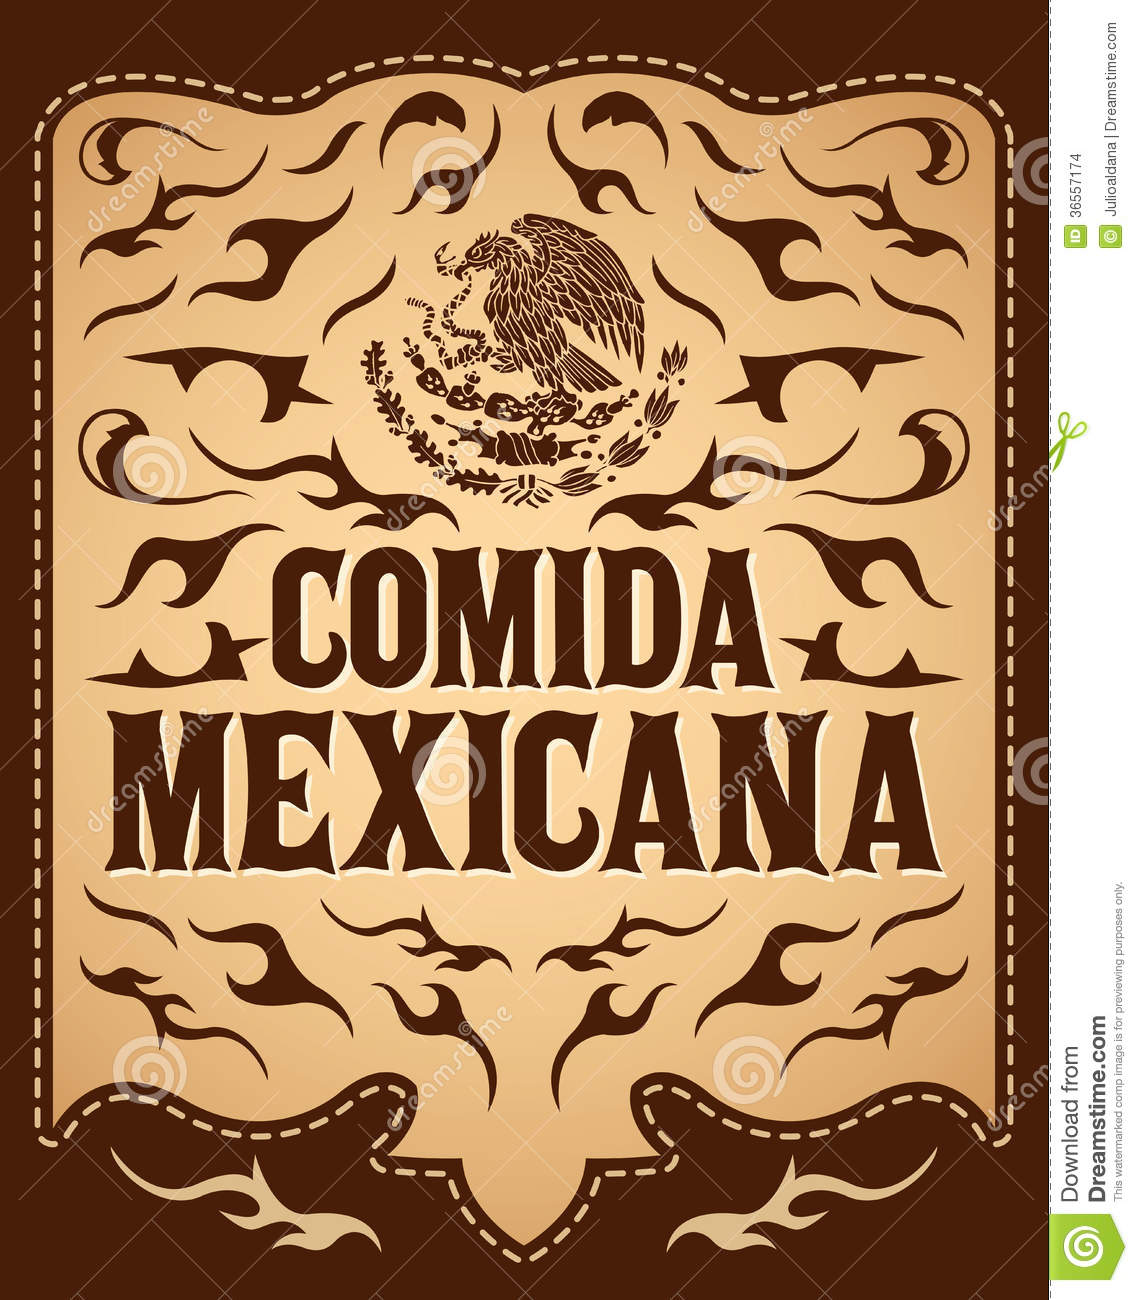 Mexican Restaurant Menu in Spanish